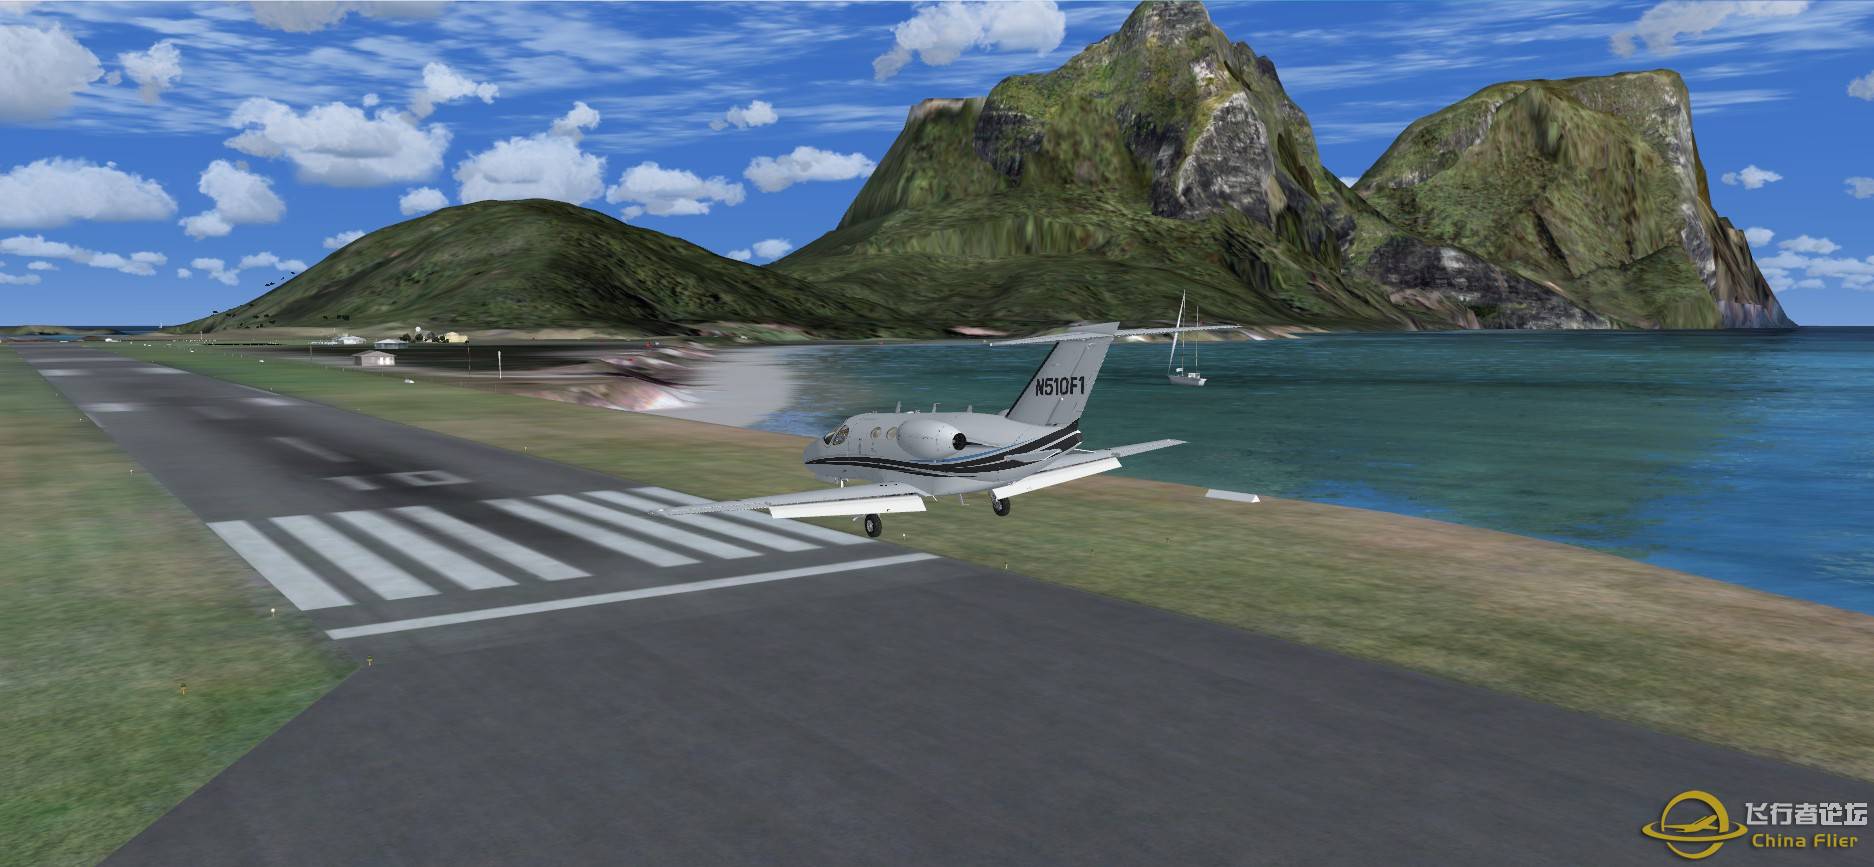 Aerosoft Lord Howe Island 紧邻澳洲的小岛-8847 